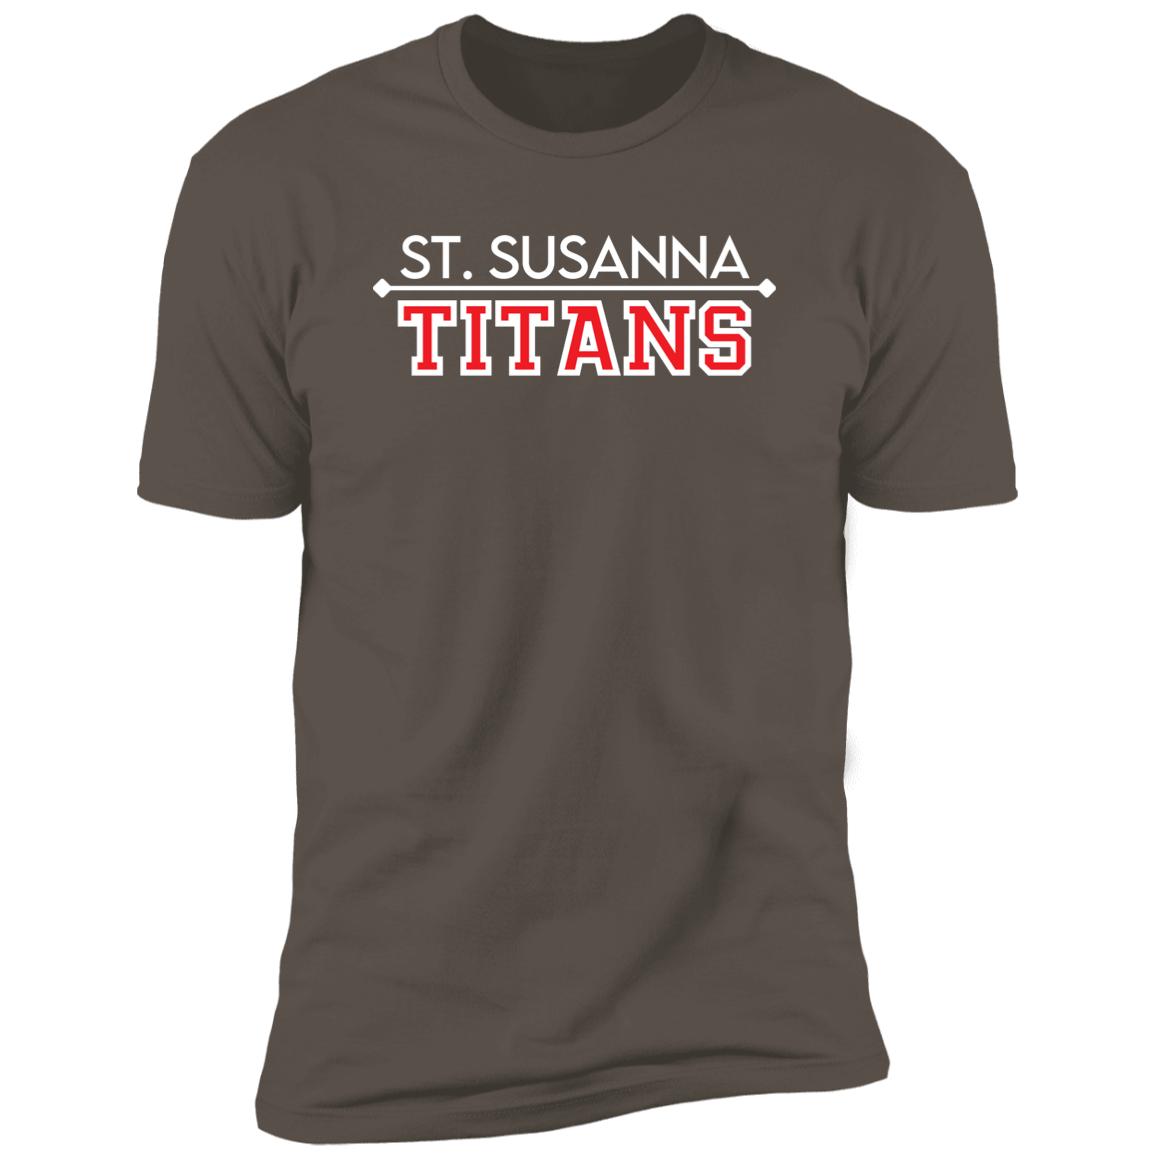 St. Susanna Titans (white/red) Unisex Premium Short Sleeve T-Shirt